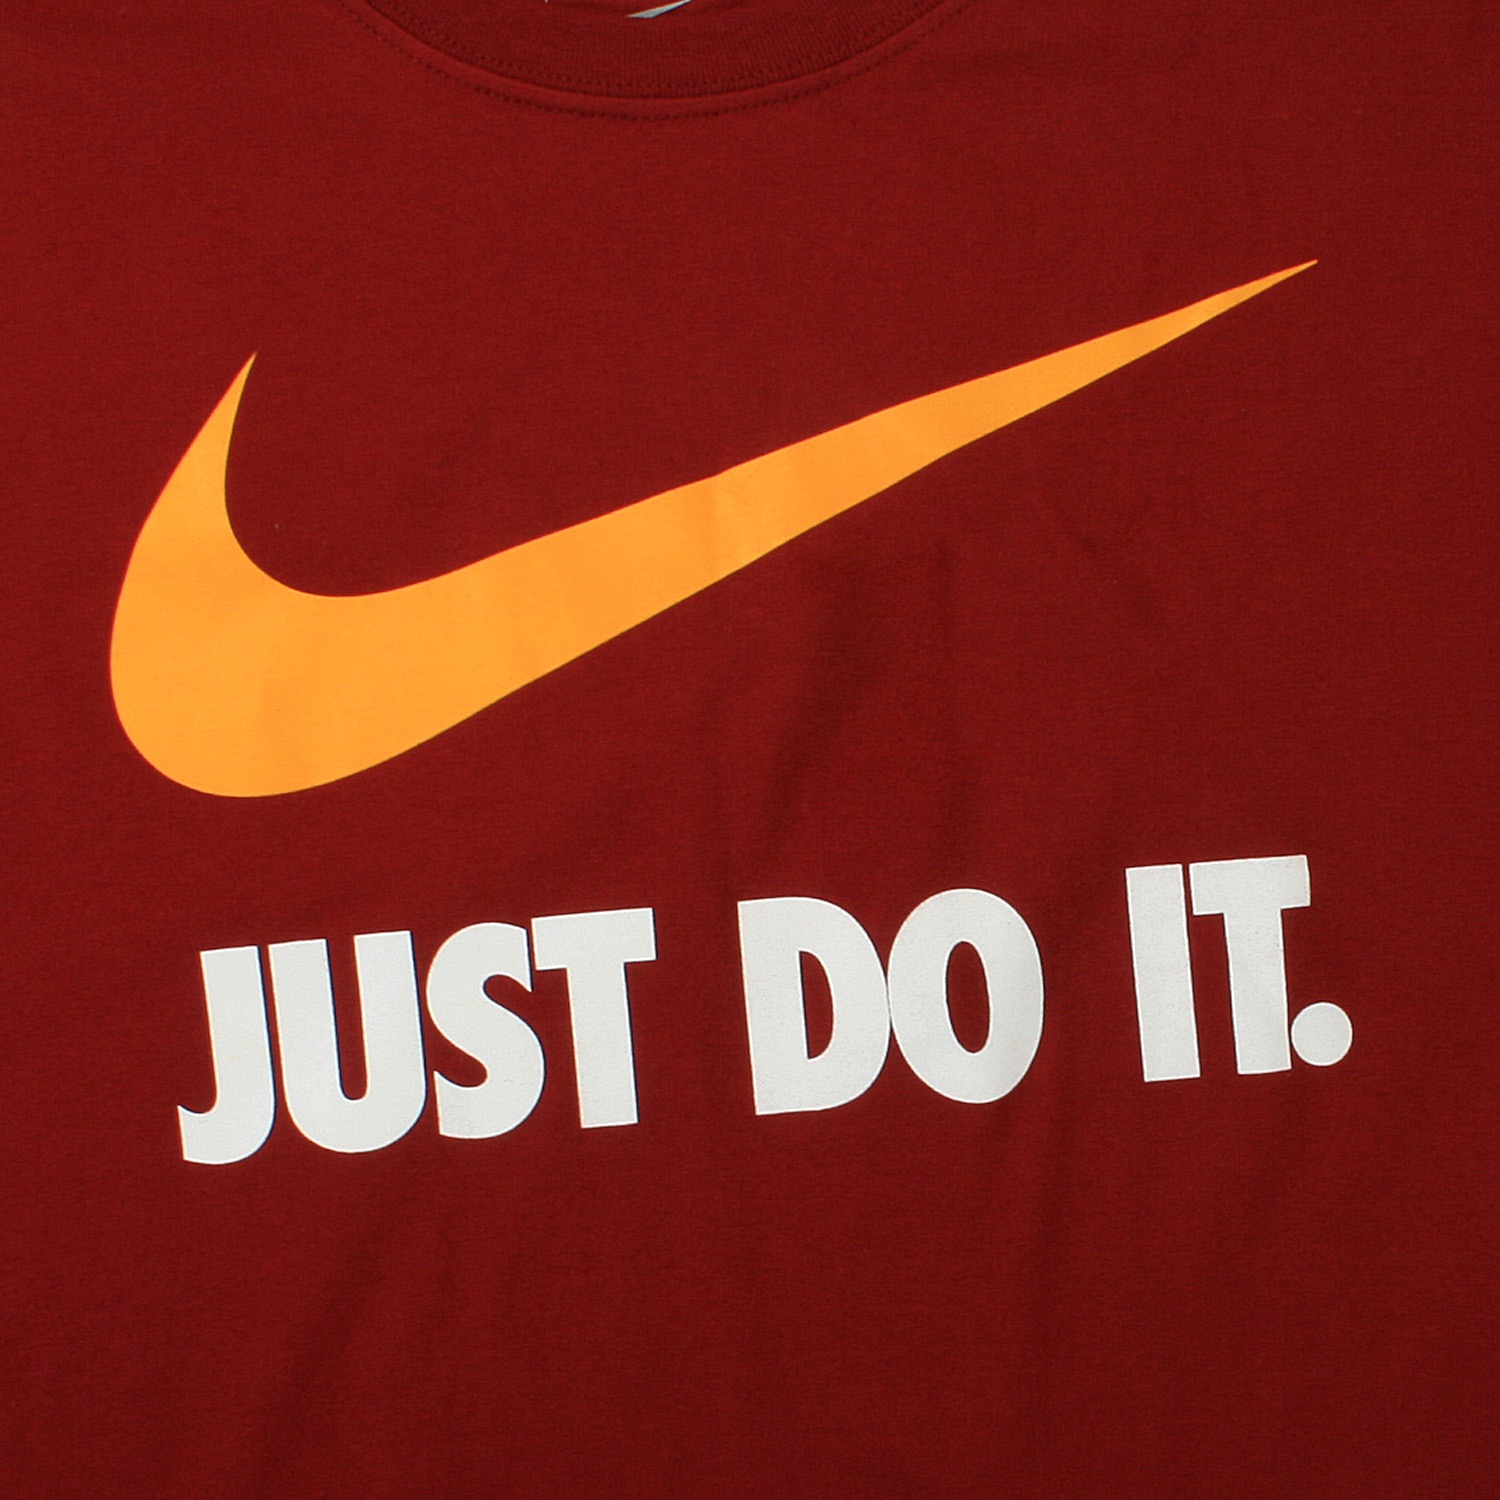 Сайт найк россия. Слоган найк. Nike лозунг. Nike слоган компании. Слоган Nike just do it.